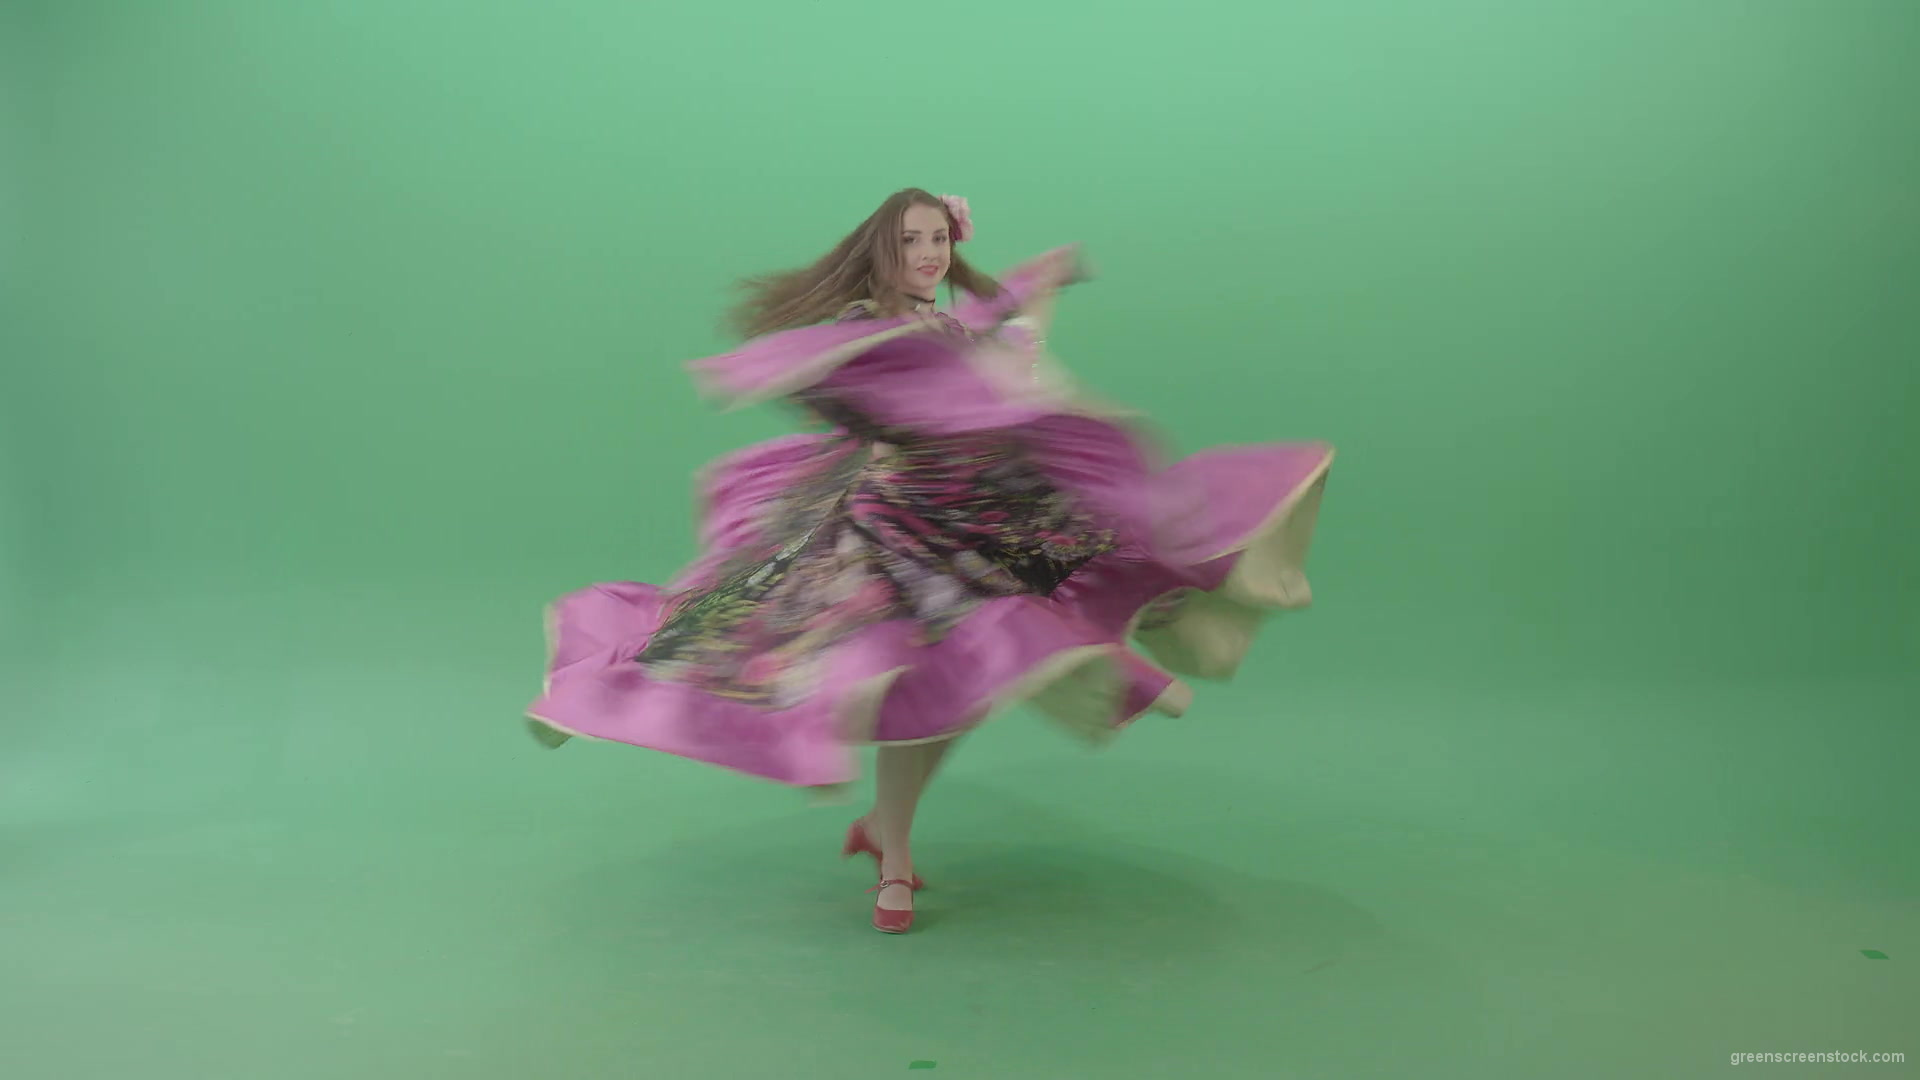 Beautiful-girl-in-balkan-pink-dress-dancing-gypsy-folk-dance-isolated-on-green-screen-4K-Video-Clip-1920_006 Green Screen Stock